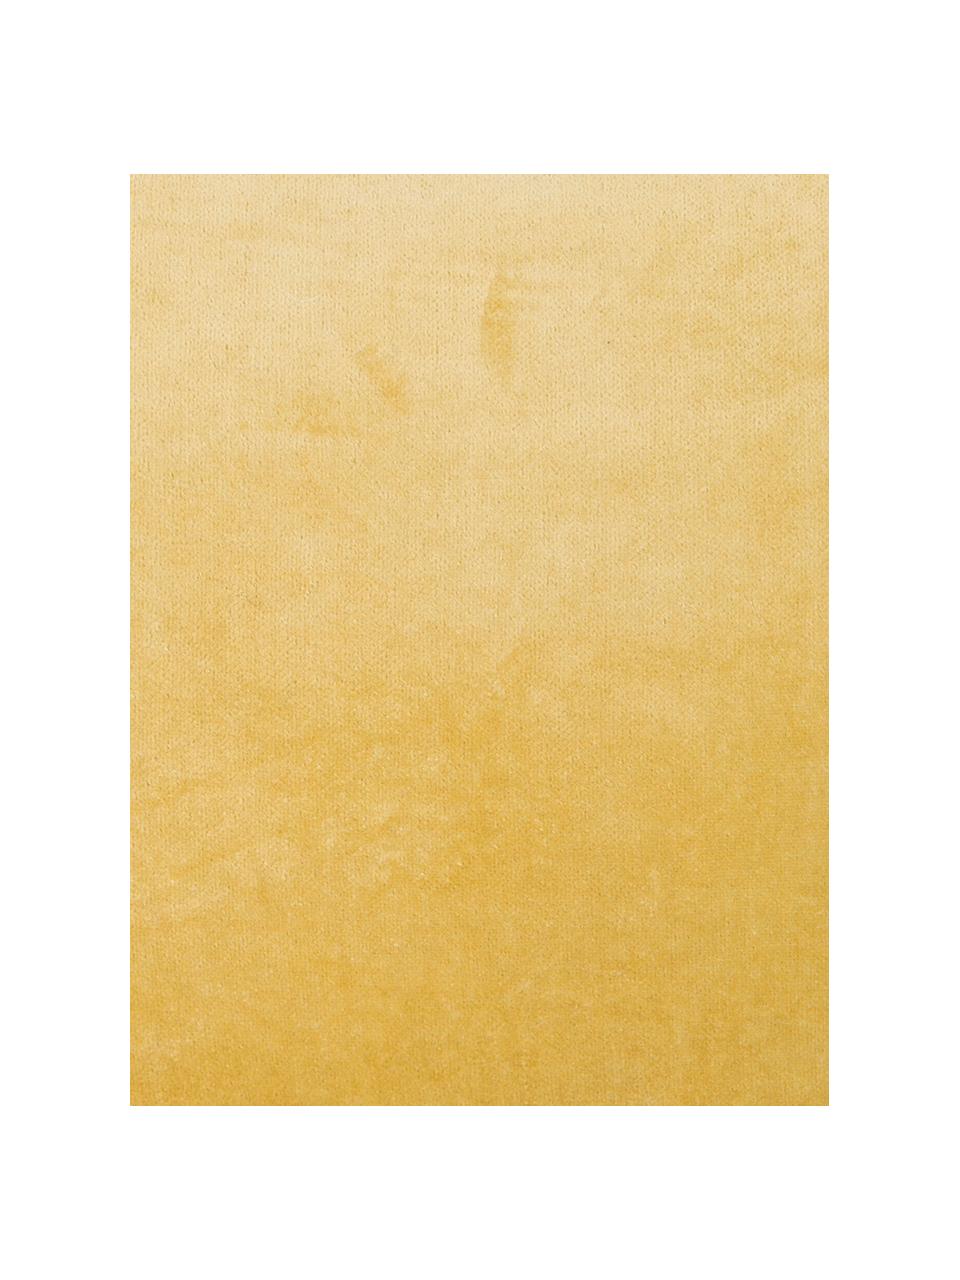 Cuscino in velluto Velvet in giallo, con imbottitura, Retro: lana, Giallo, beige chiaro, Larg. 30 x Lung. 50 cm